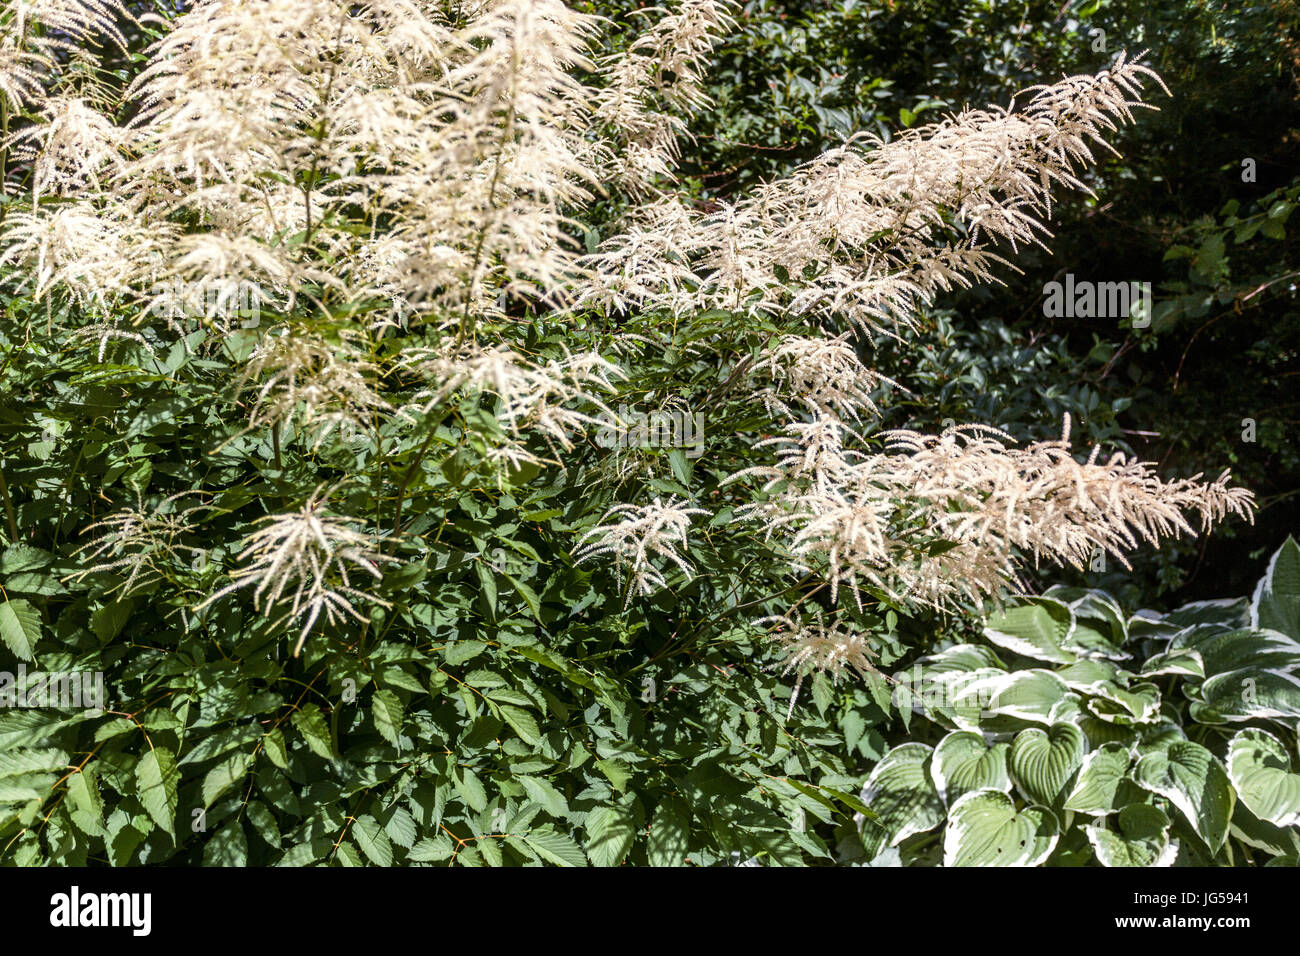 Bride's Feathers Aruncus dioicus, Flowering Hosta plant, perennial garden shade plants Stock Photo